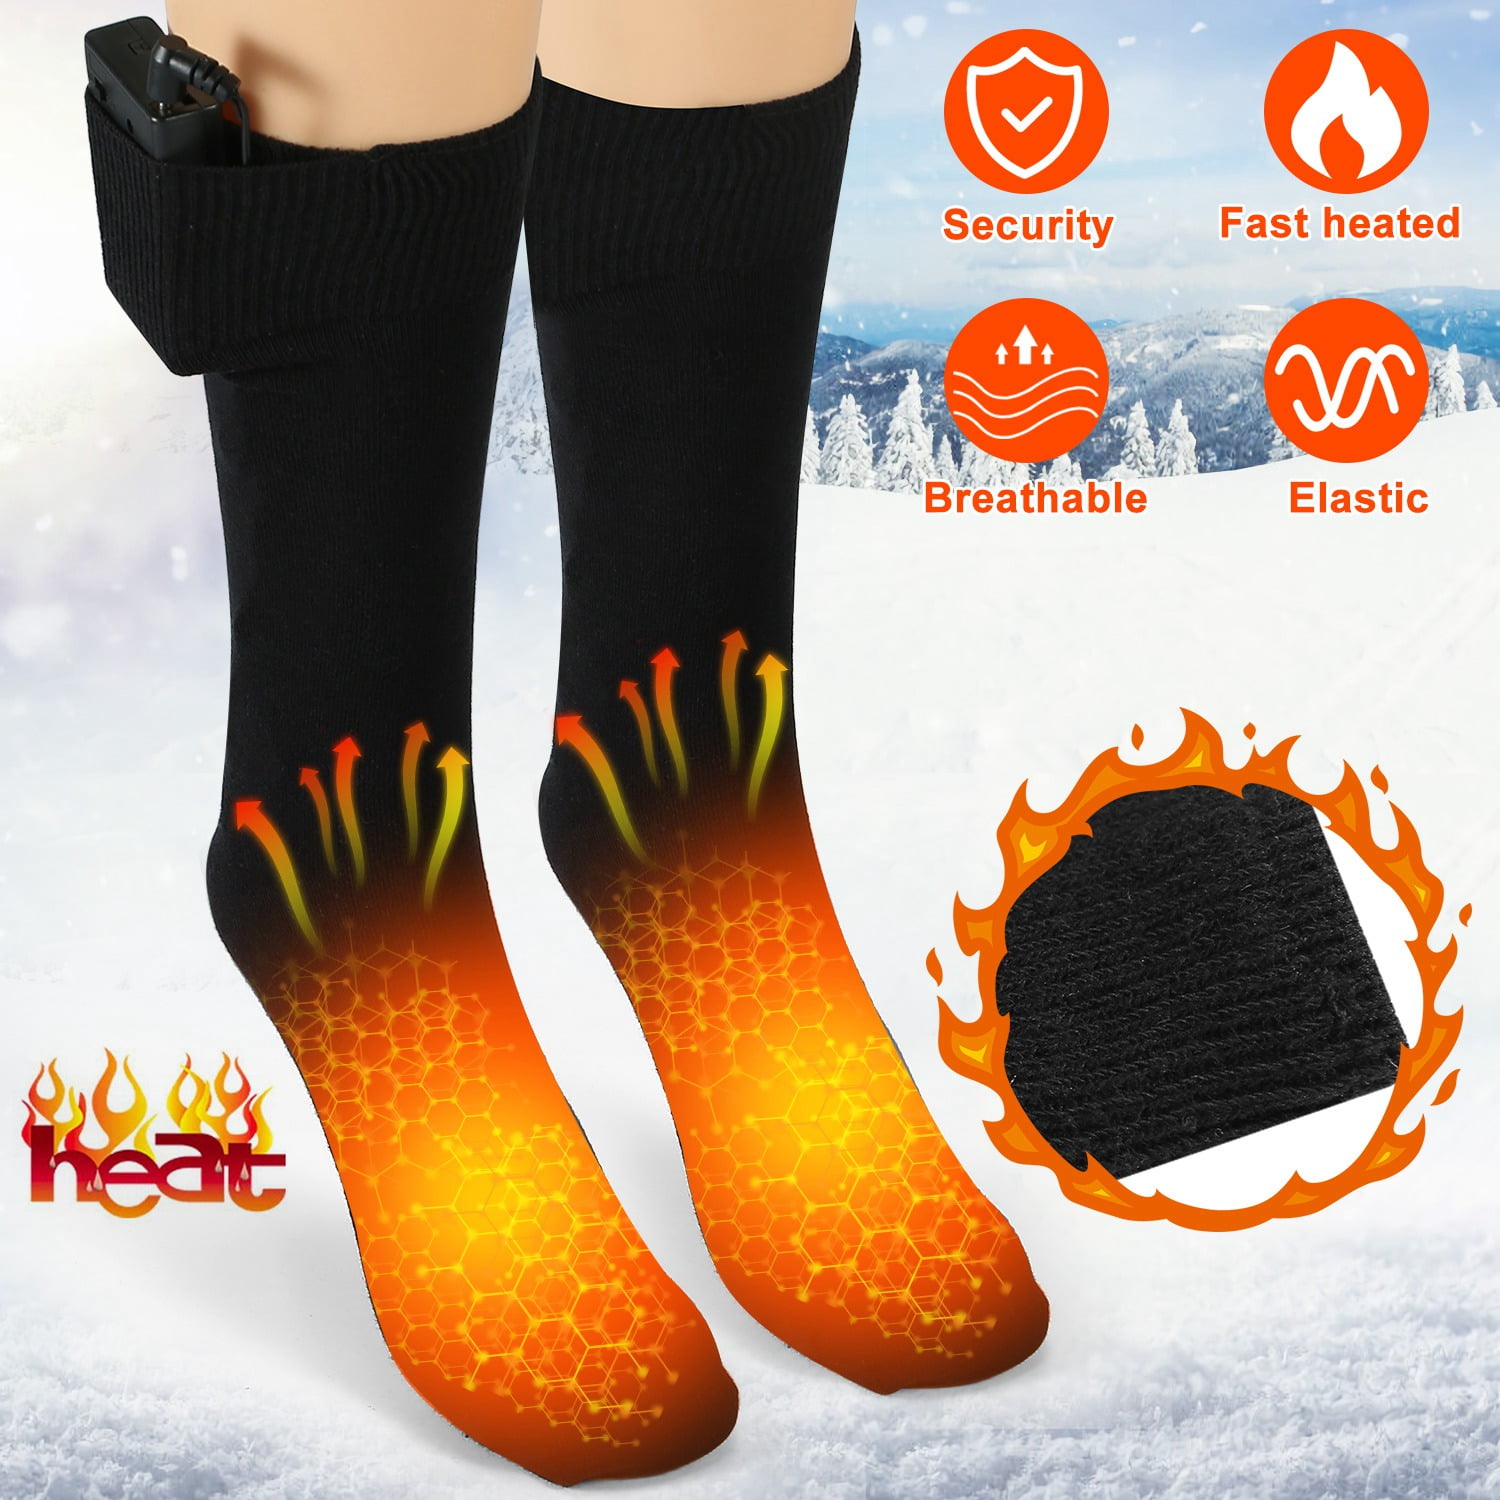 4.5V AA Battery Electric Heated Socks Feet Foot Warmer Winter Outdoor Hiking UK 